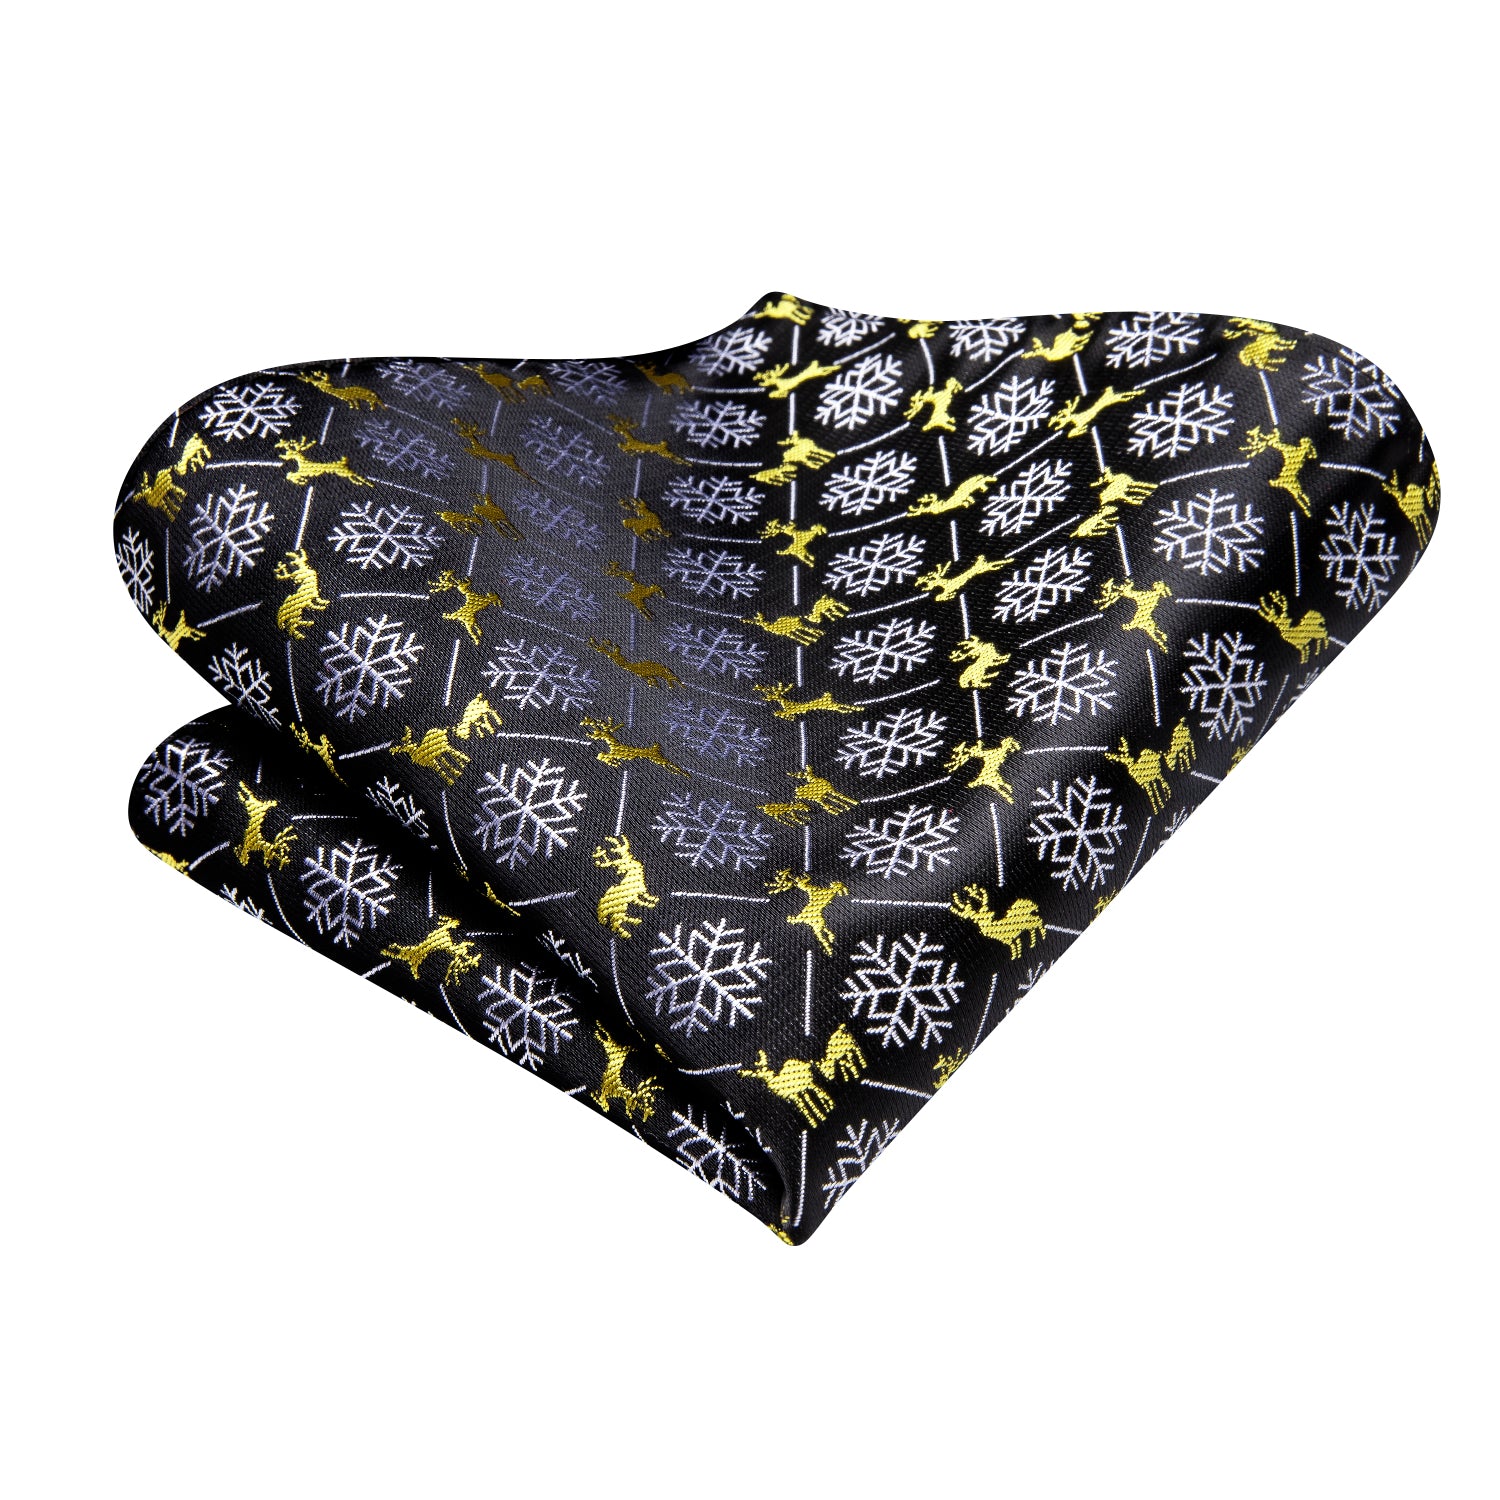 Black White Christmas Snowflakes Self-tied Bow Tie Hanky Cufflinks Set